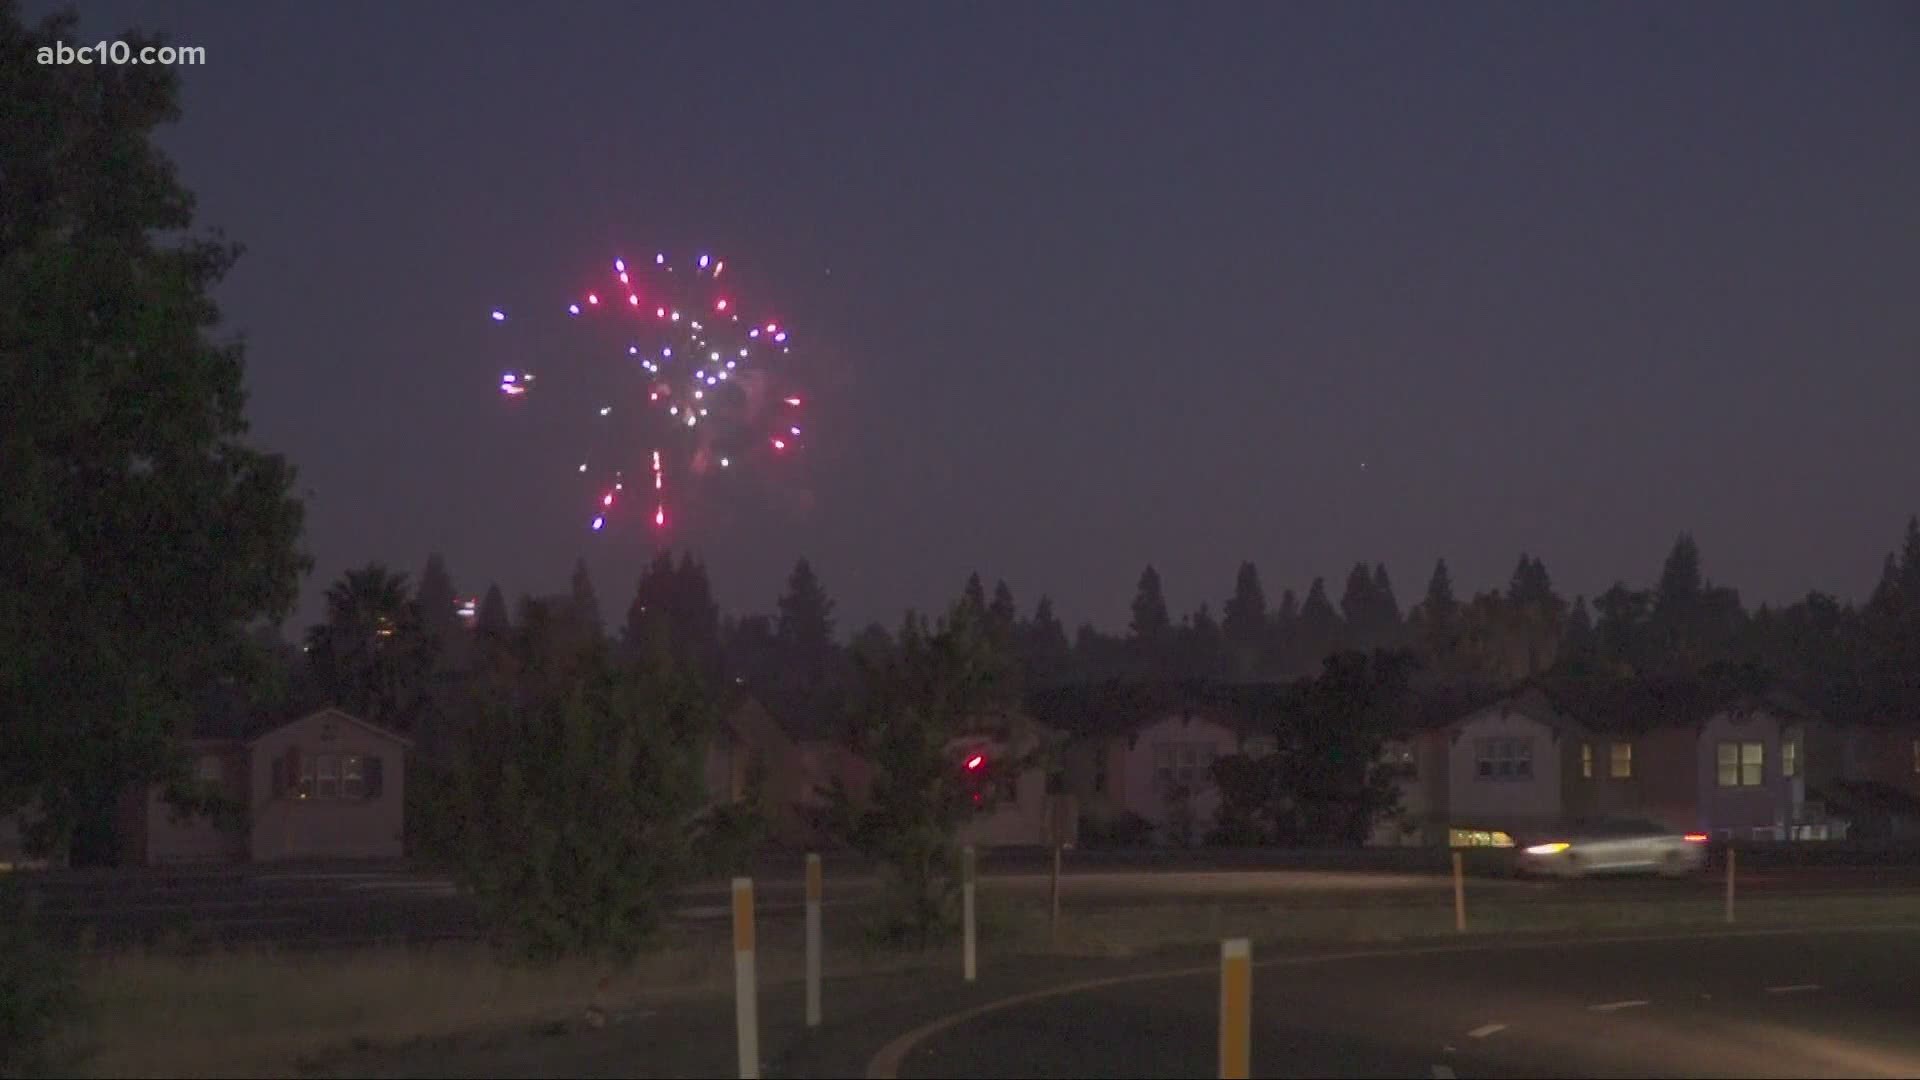 Despite the threat of fines, amateurs shot off rockets in several Sacramento neighborhoods.